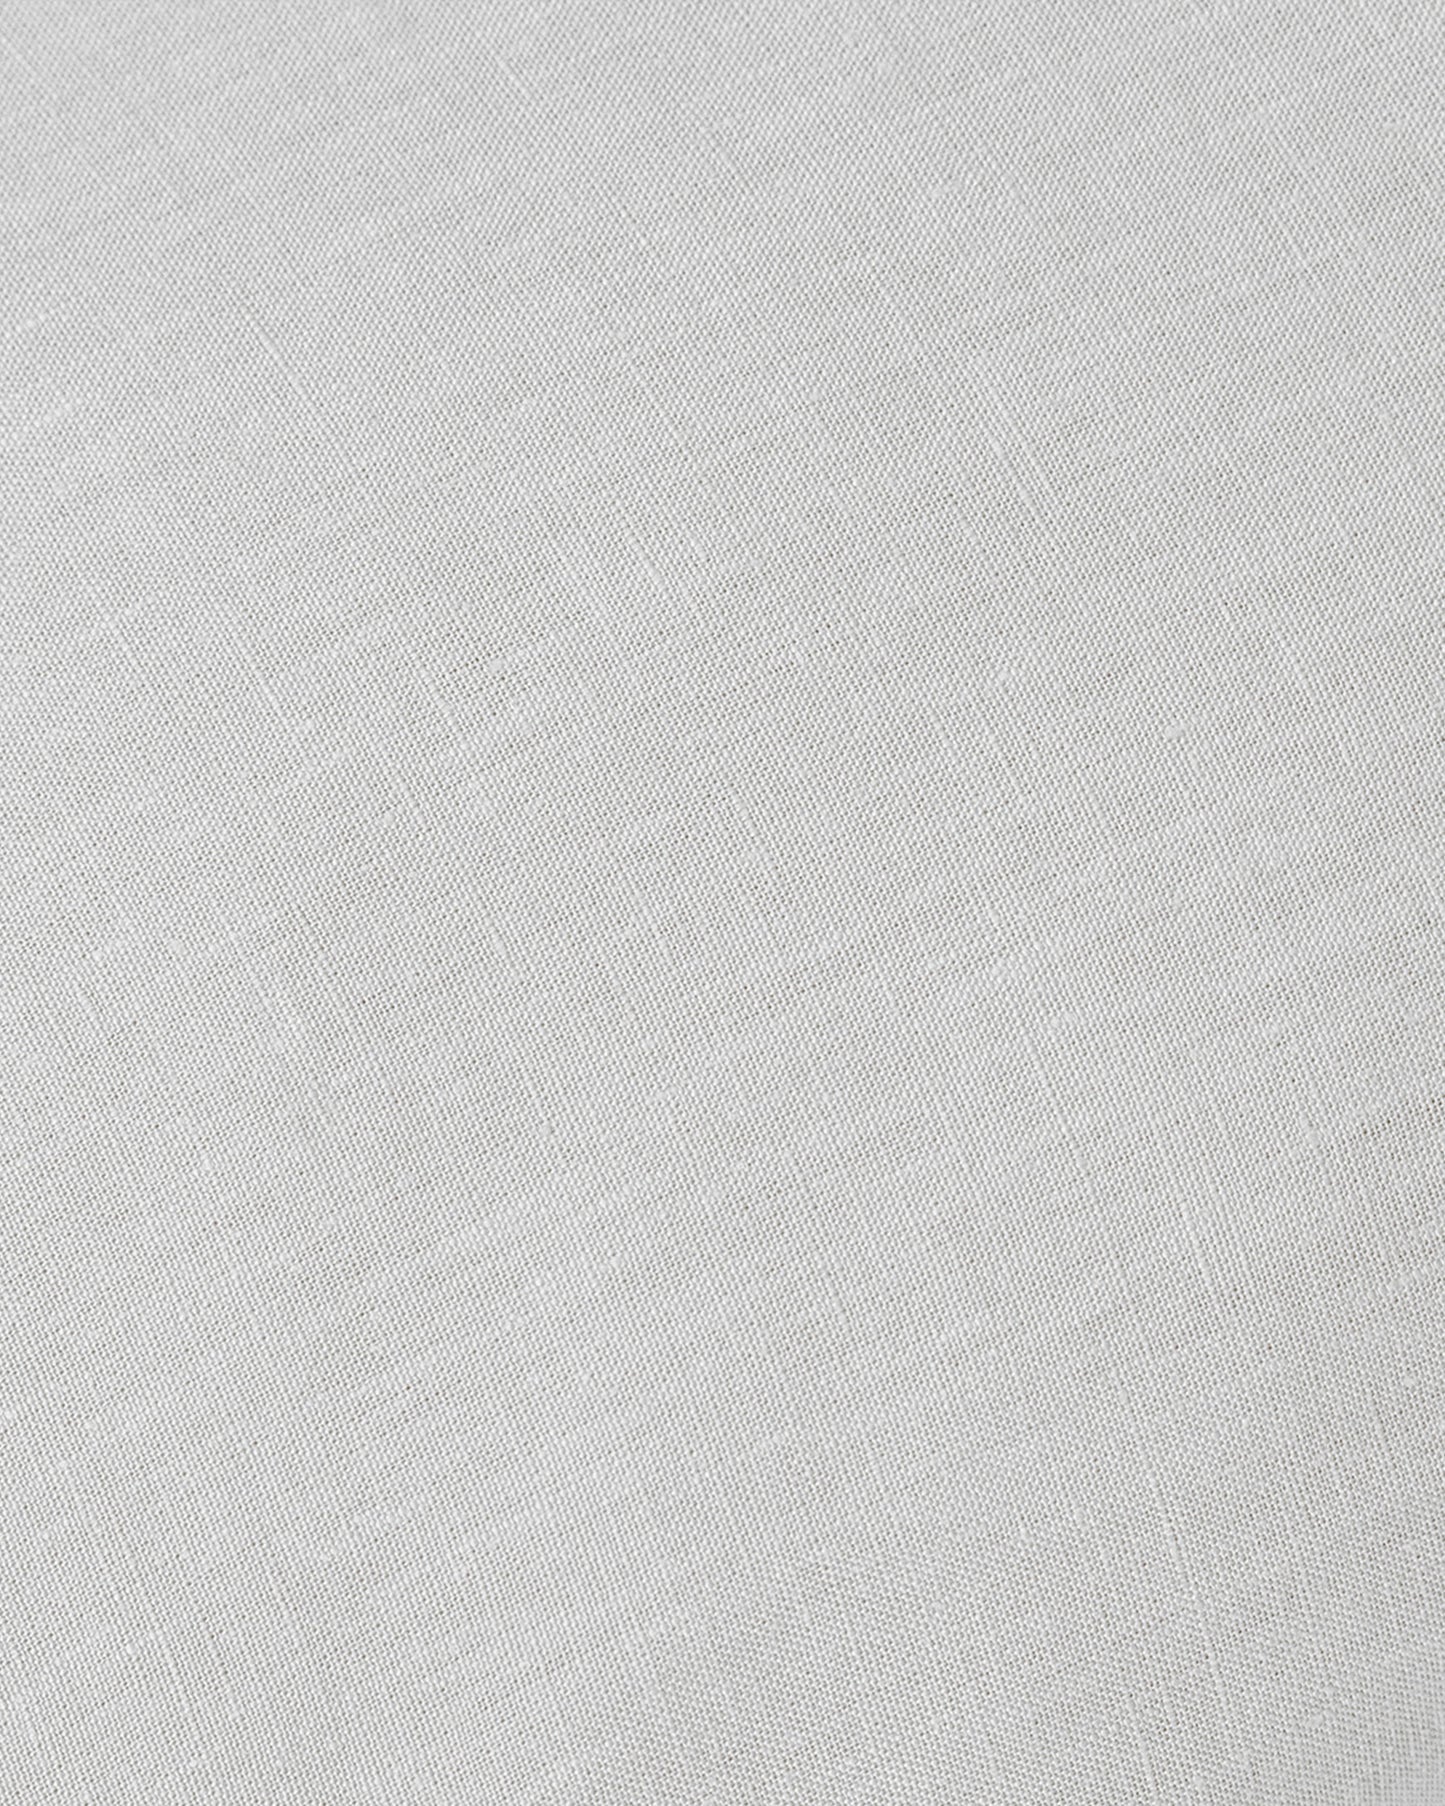 Ruffle trim linen tea towel in Light gray - MagicLinen